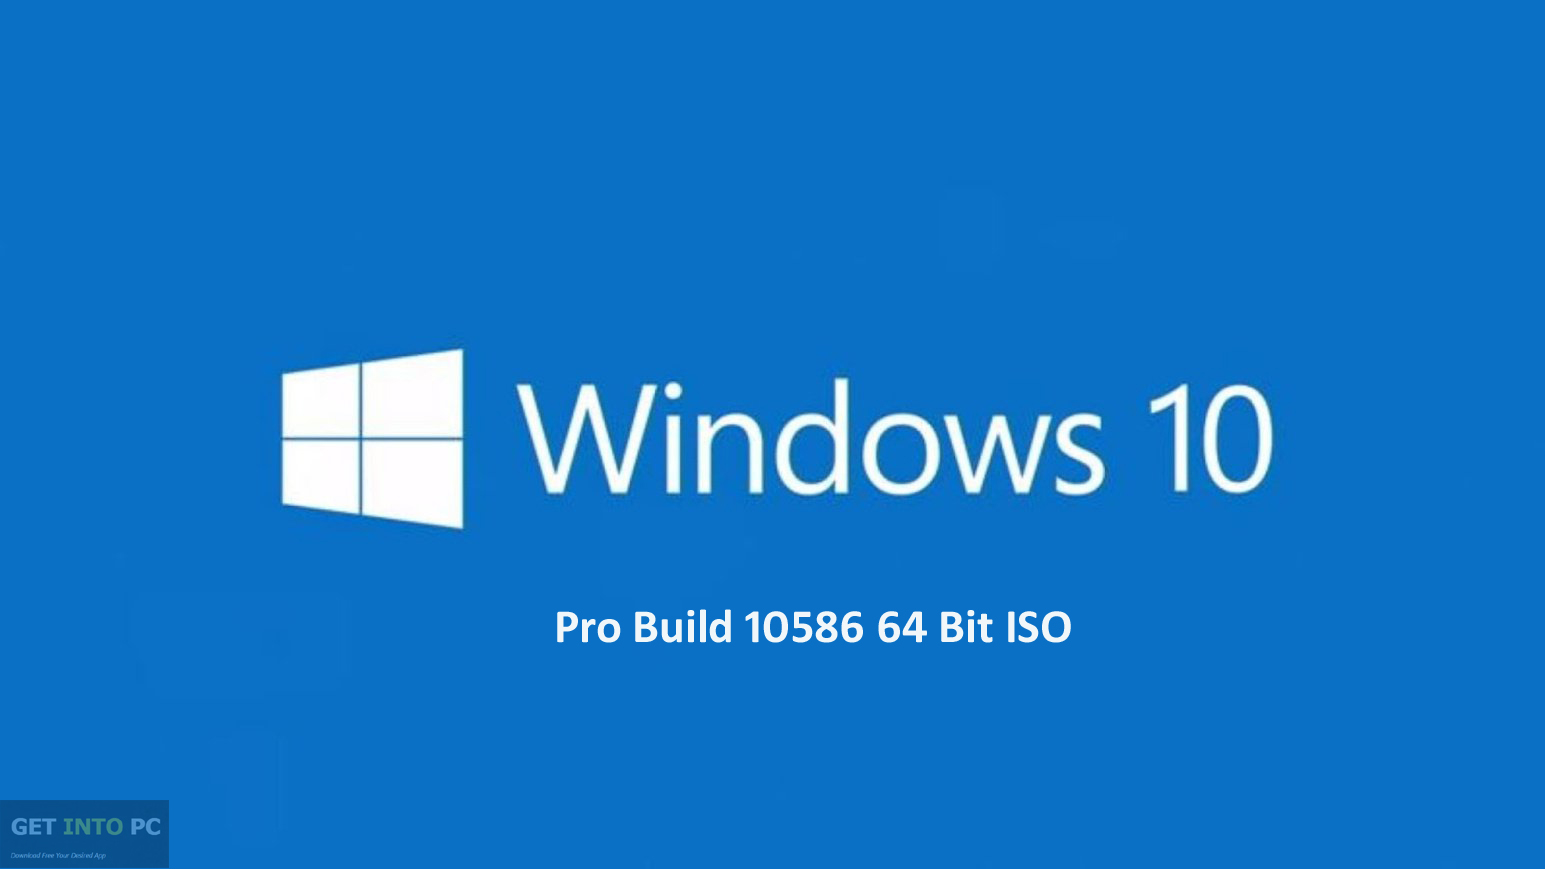 microsoft windows 10 pro iso download file 64 bit